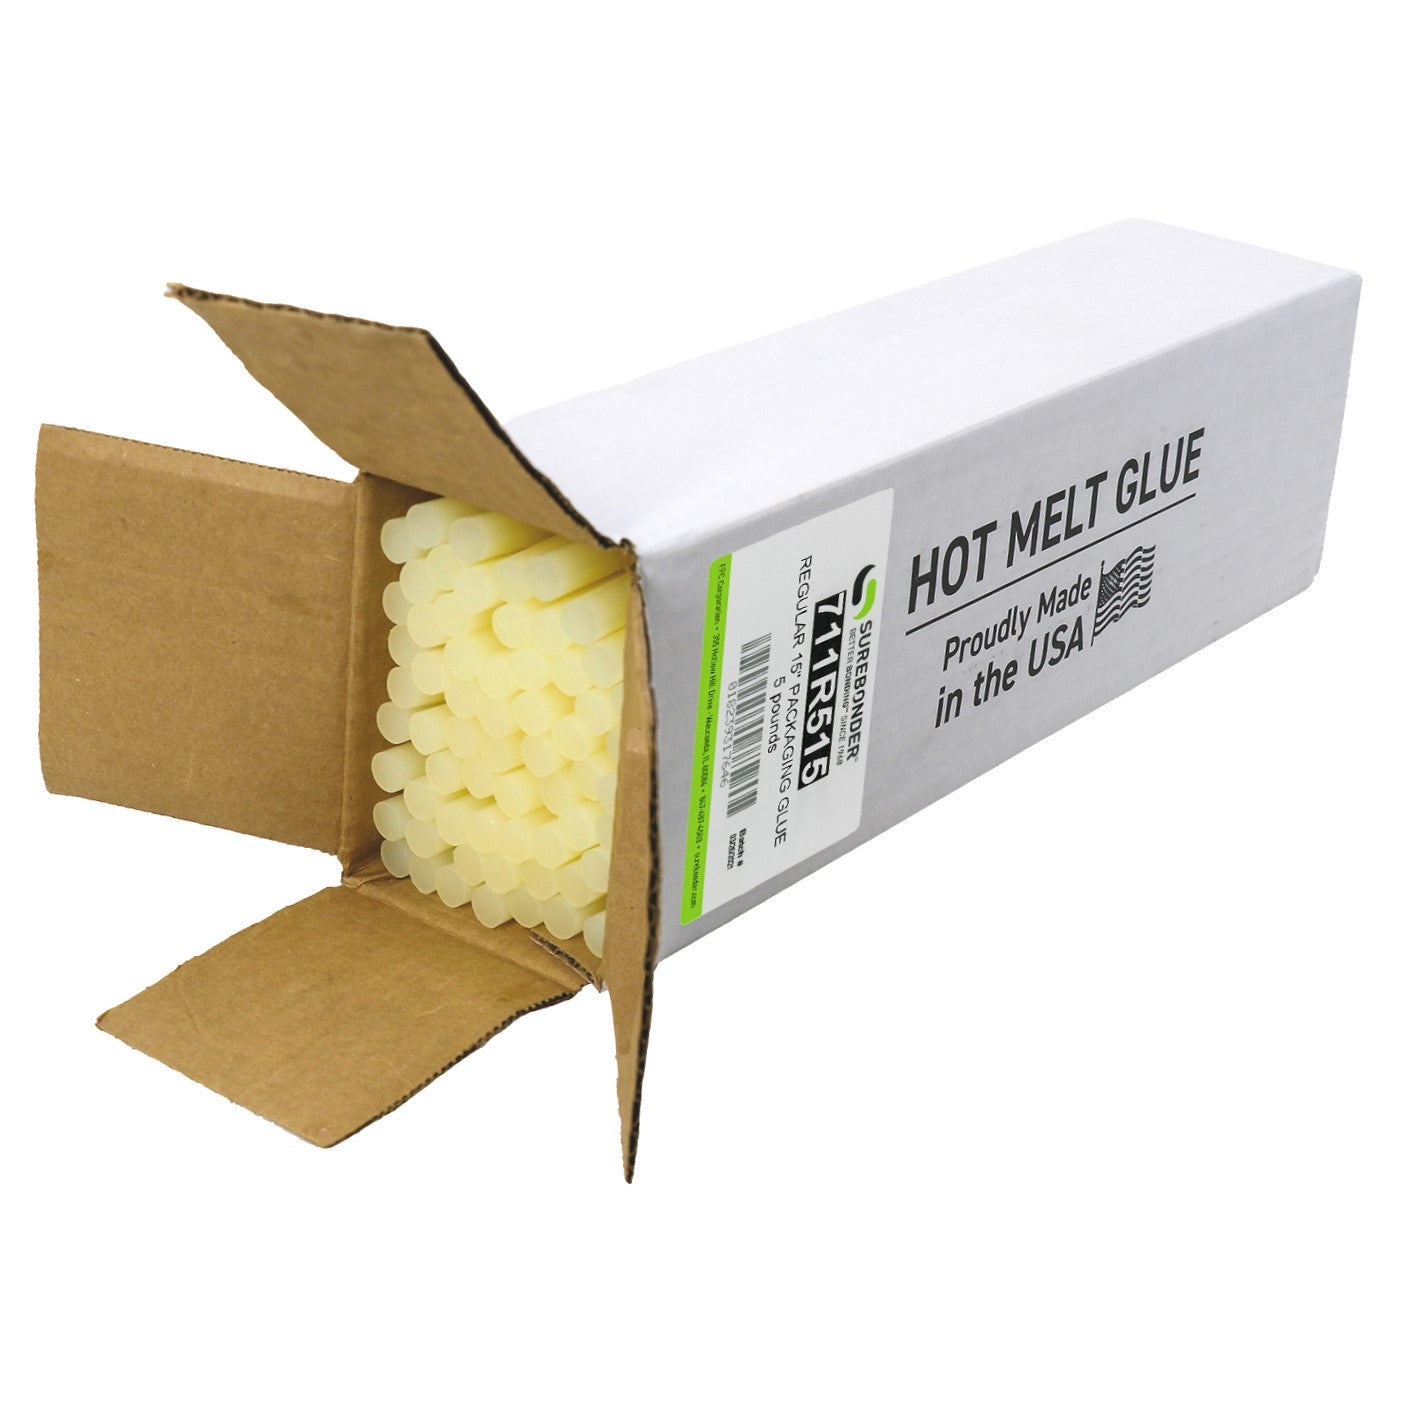 Surebonder Hot Melt Glue Stick,Clear,7/16 x 4In,PK6 DT-6, 1